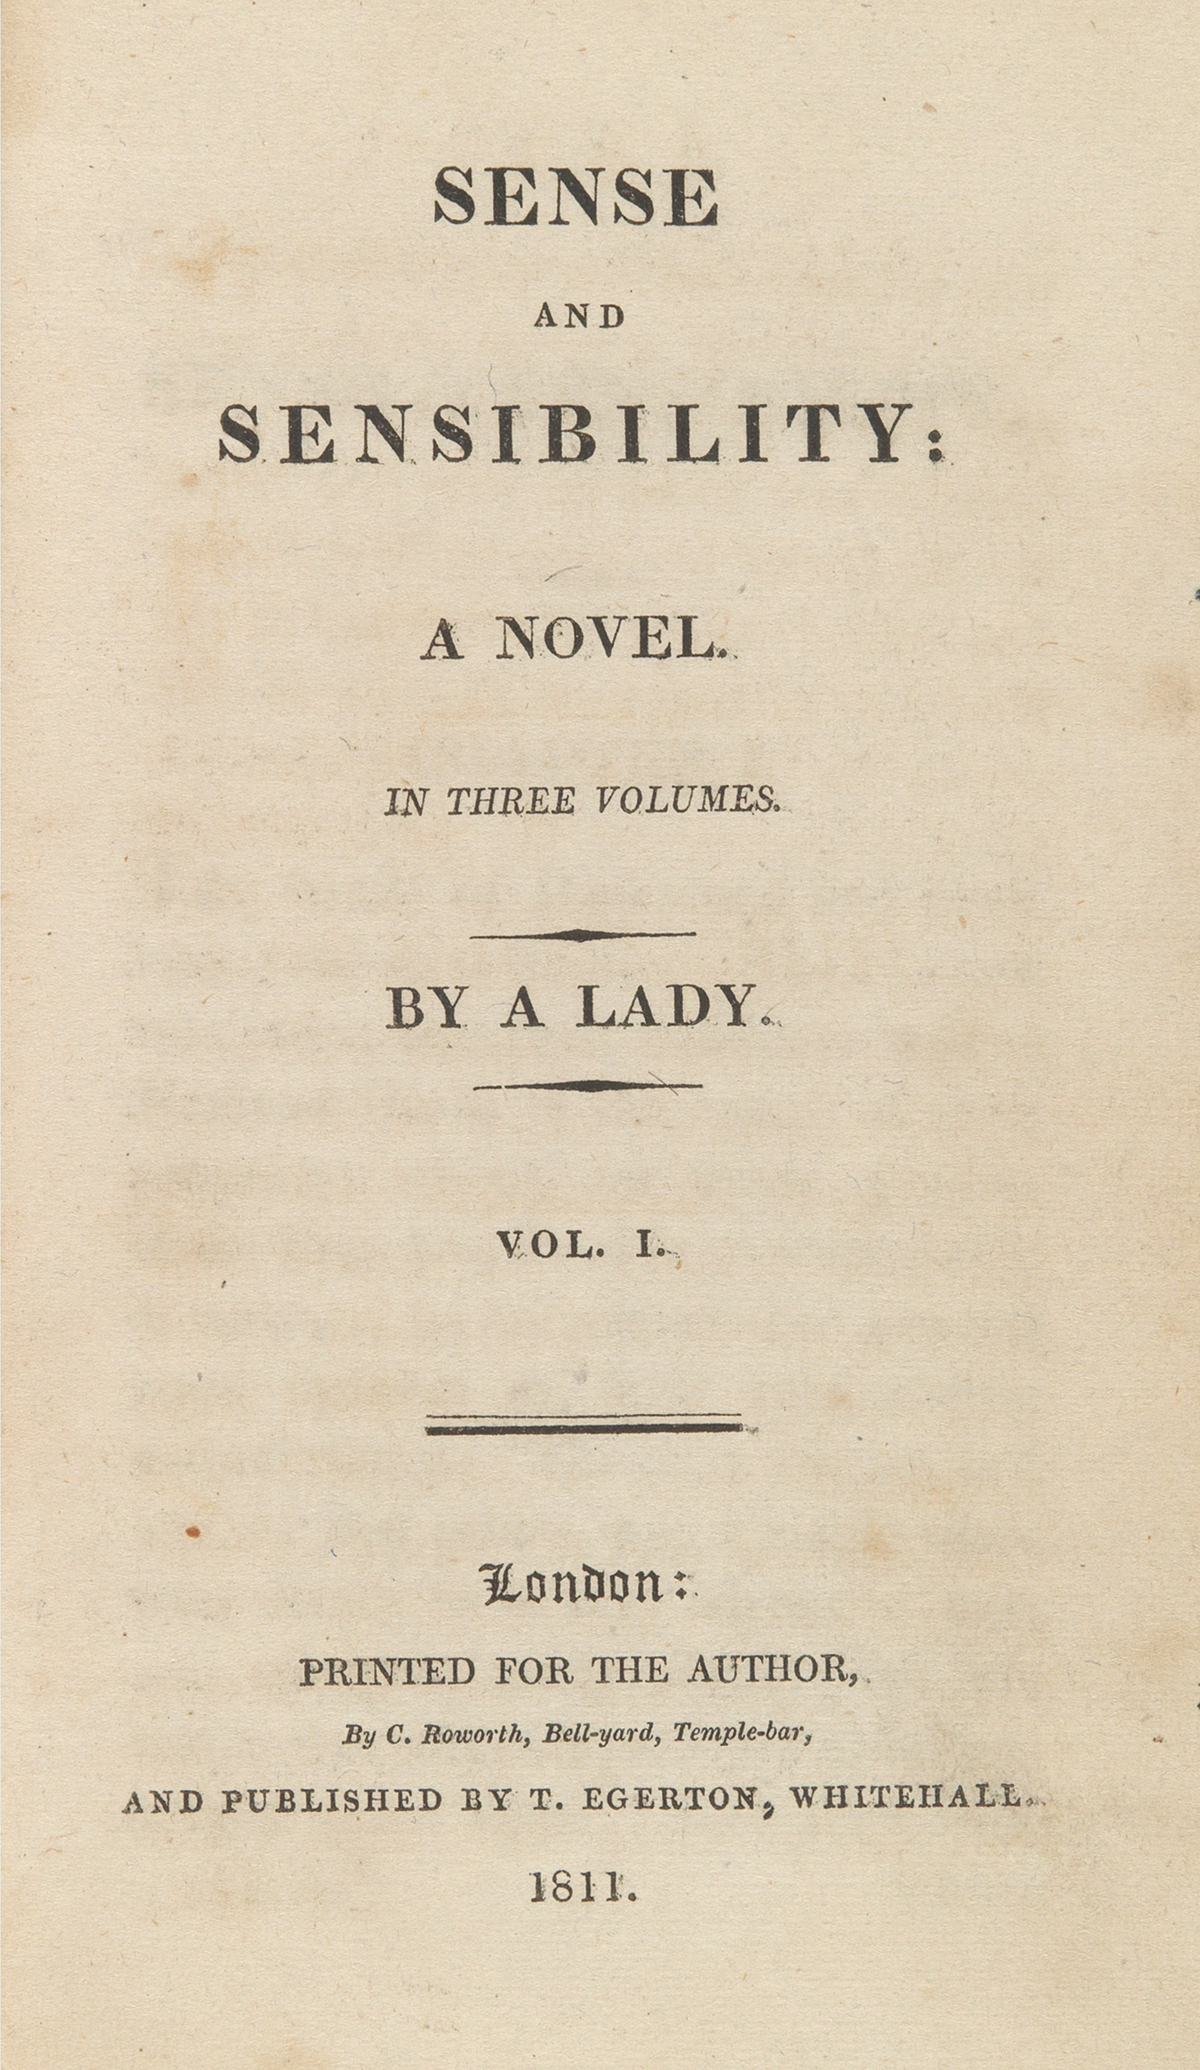 AUSTEN, JANE. Sense and Sensibility: A Novel. In Three Volumes.